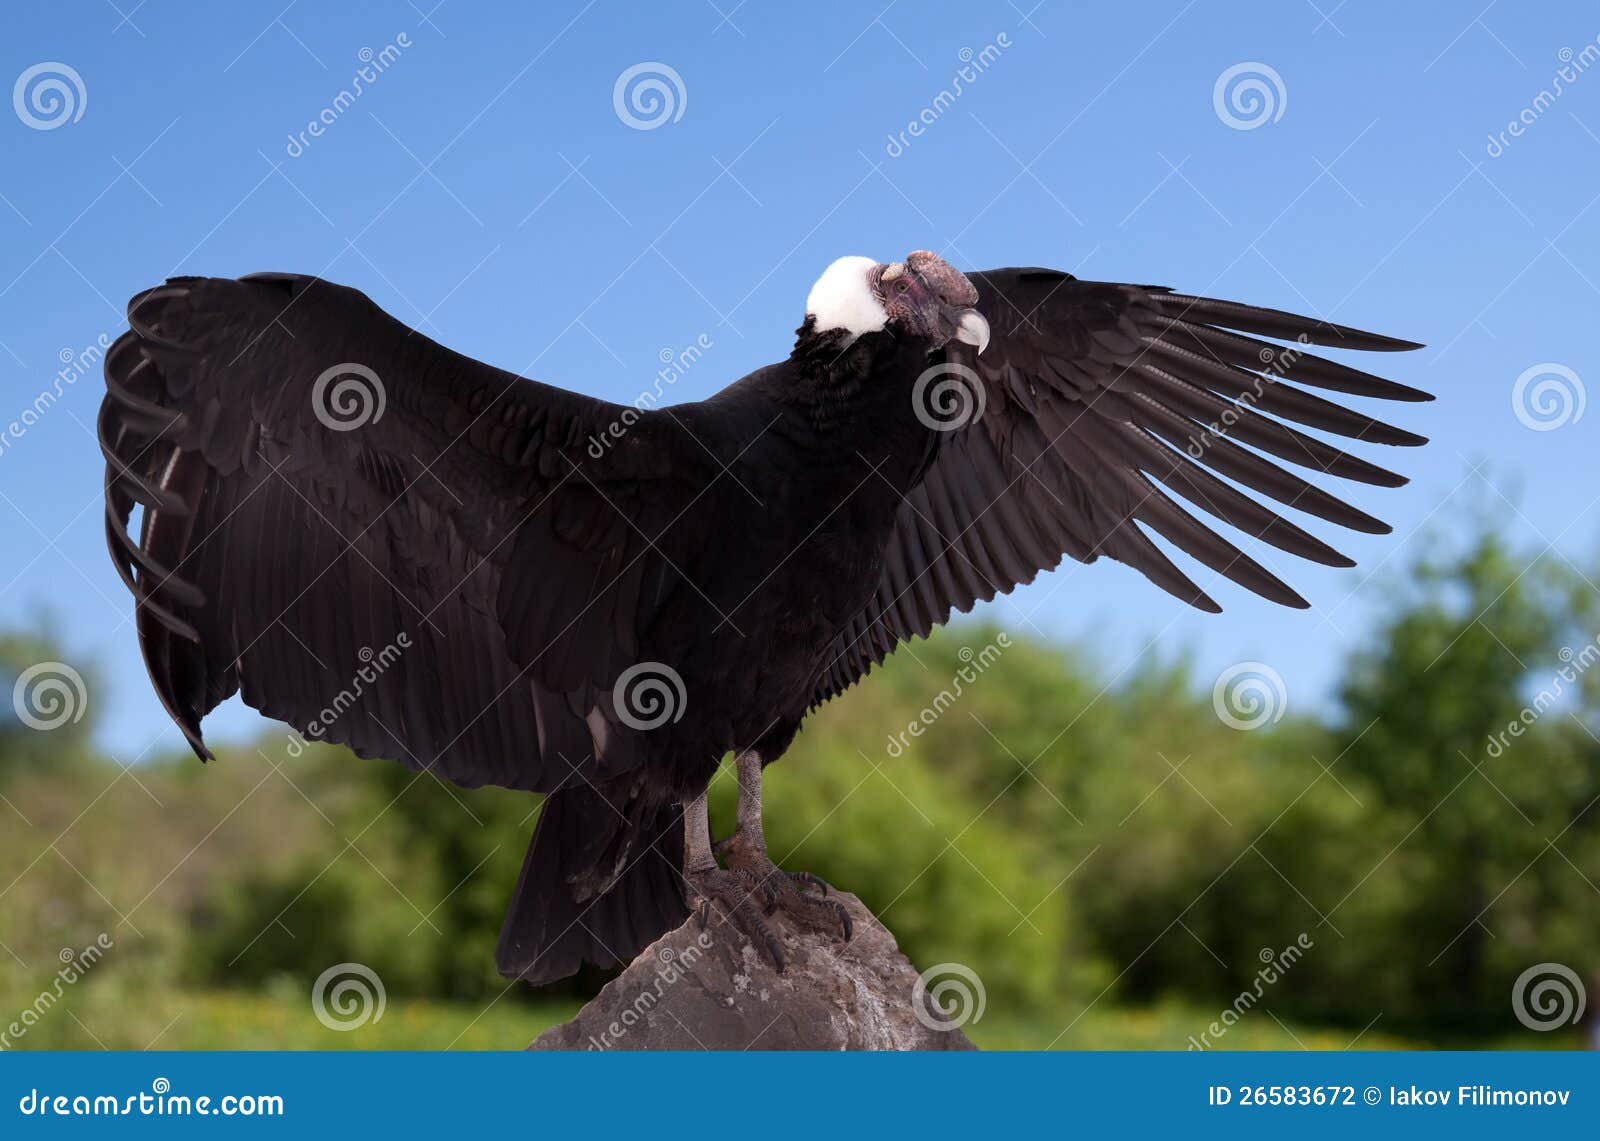 vultur gryphus in wildness area